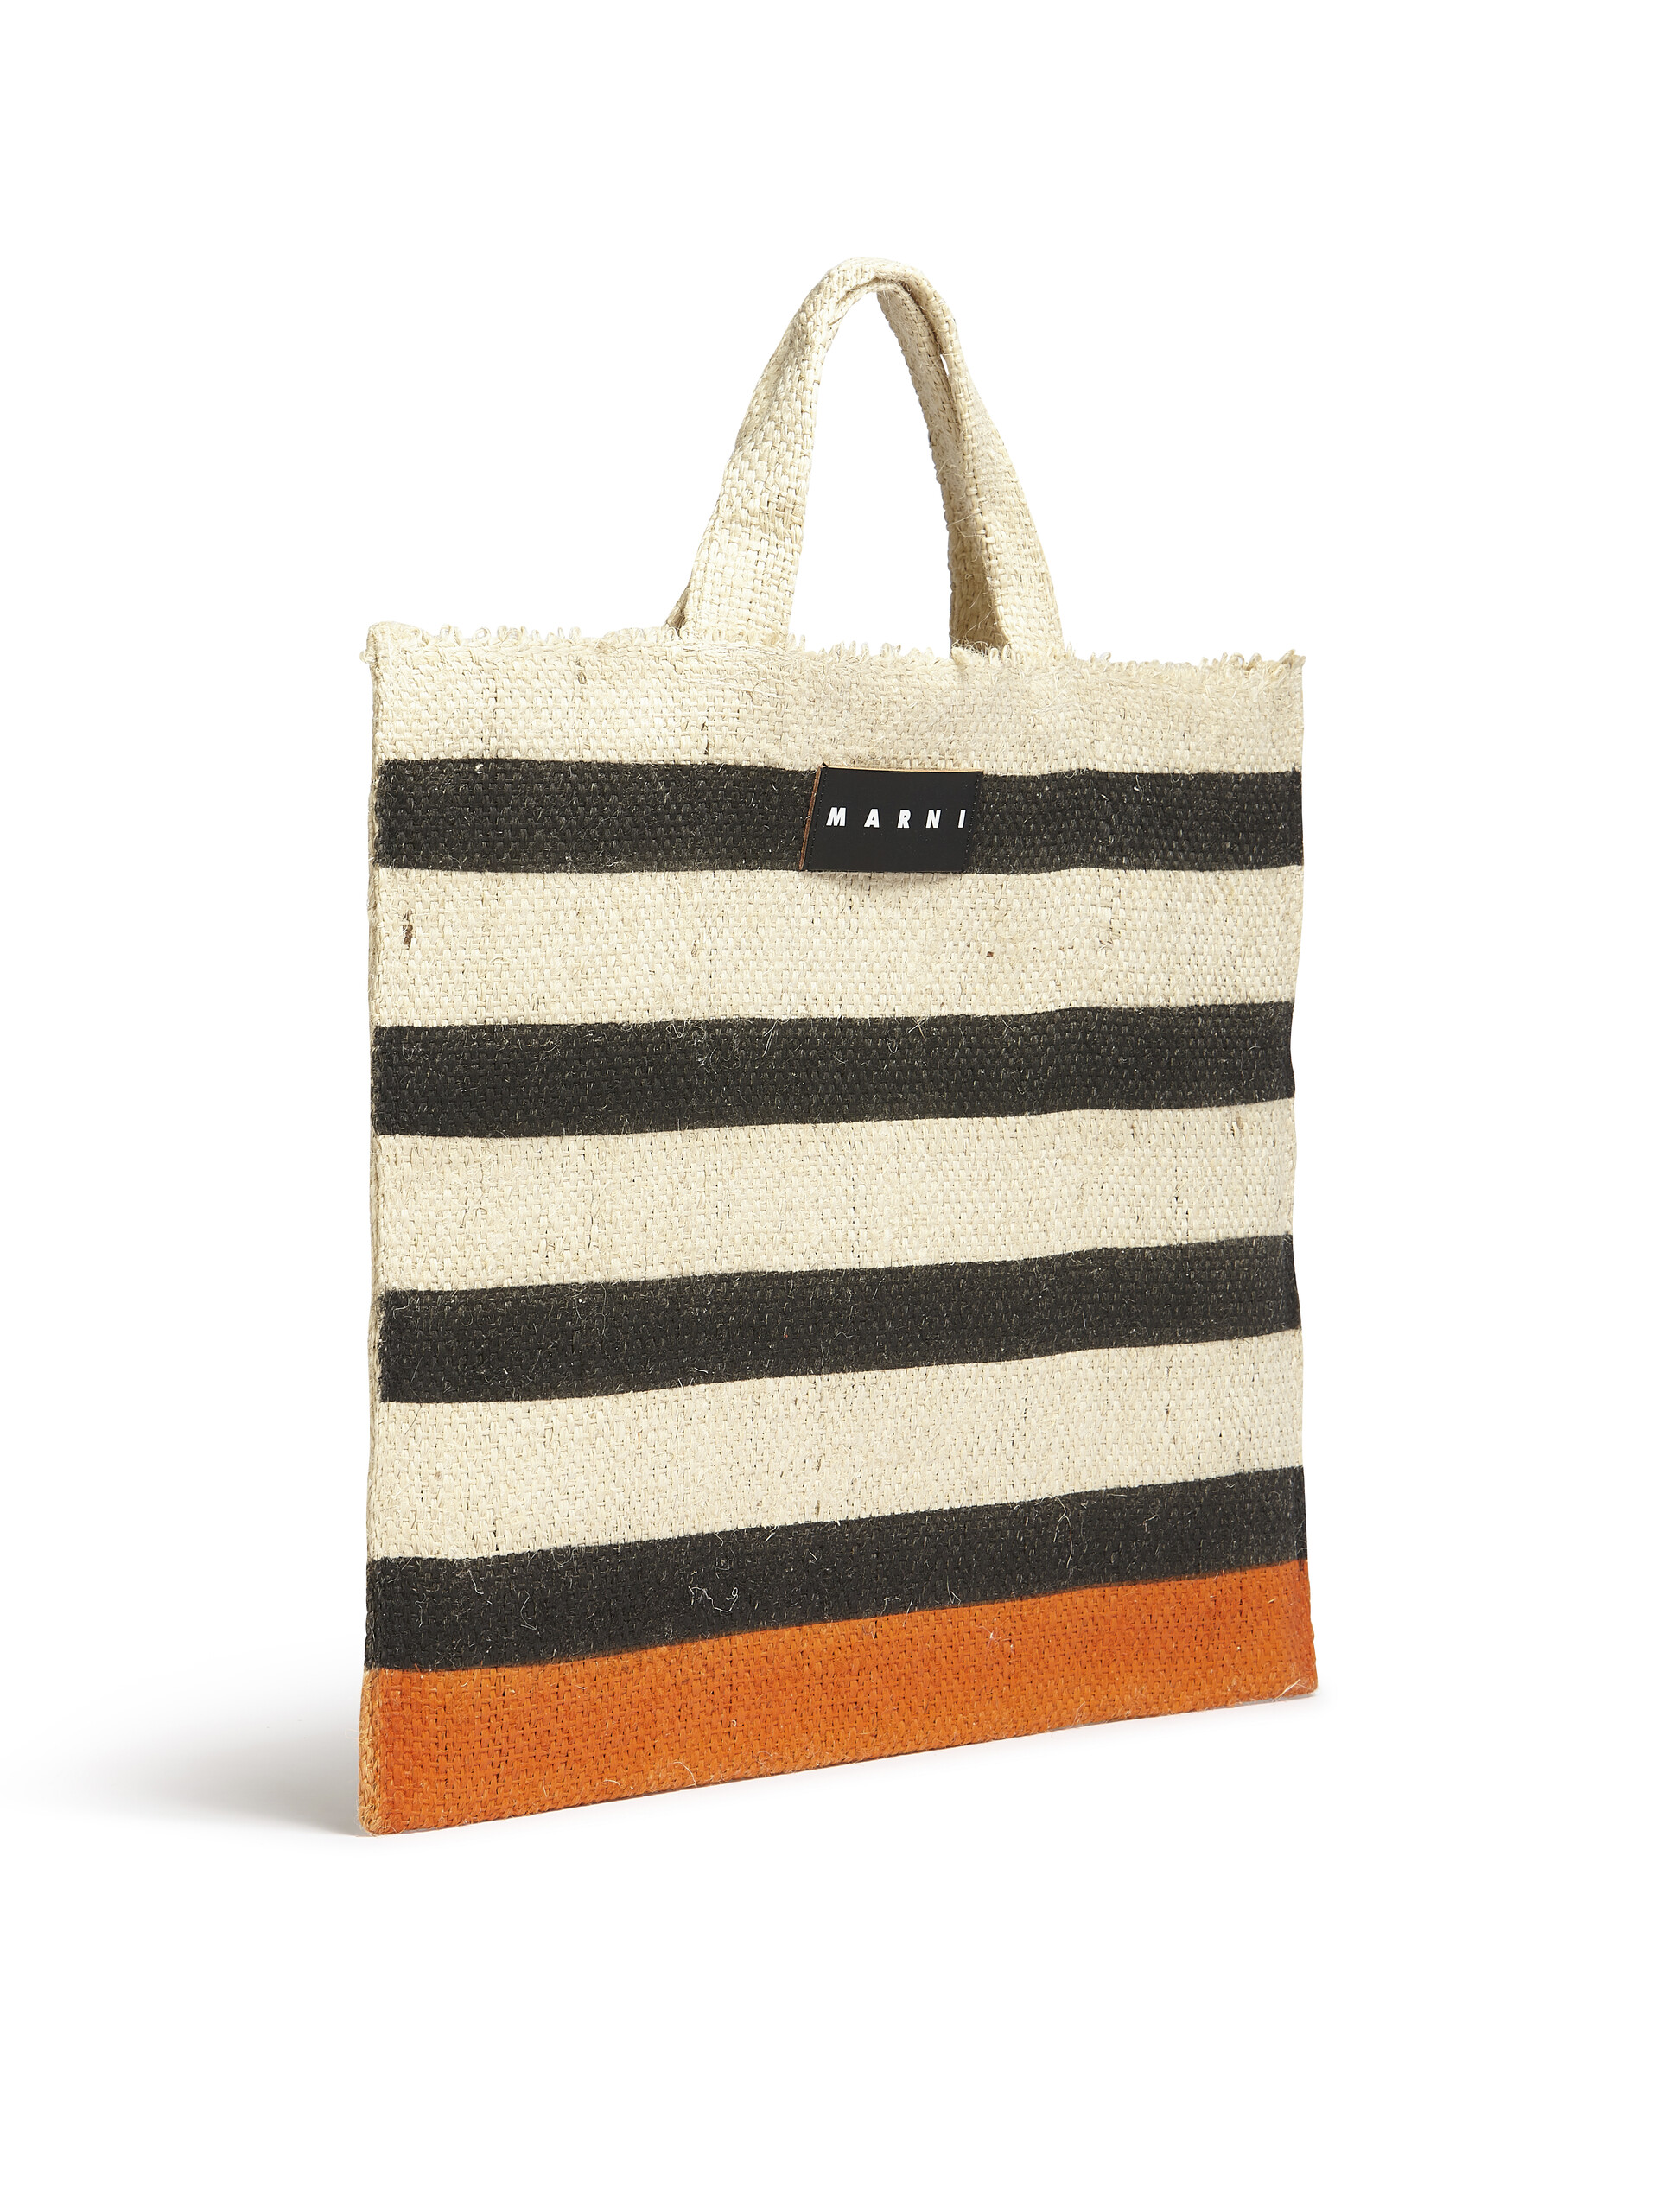 MARNI MARKET large bag in black and orange natural fiber - Bags - Image 2